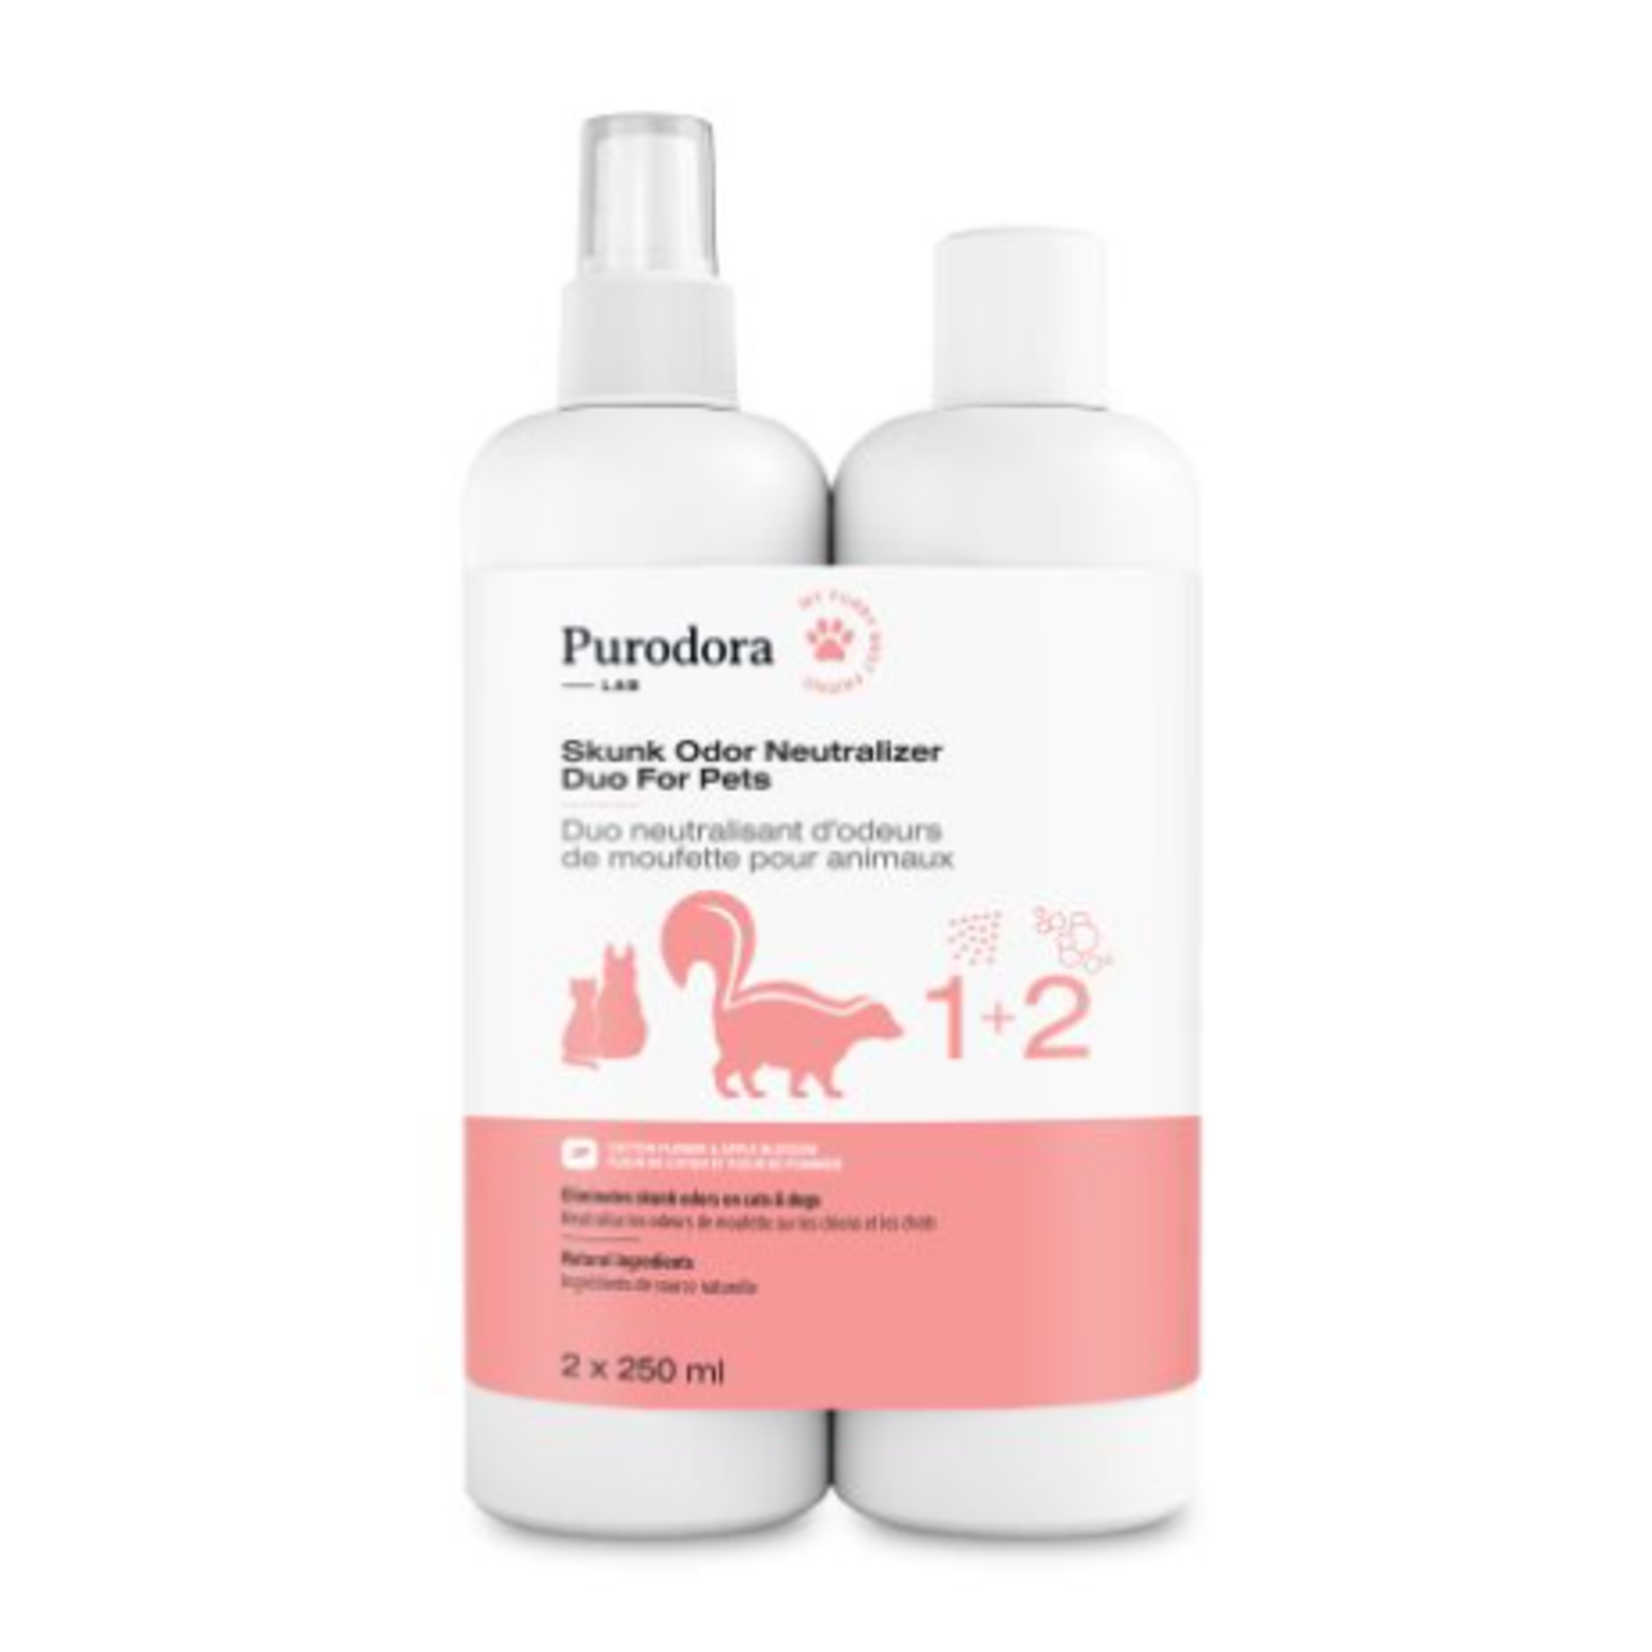 Purodora Lab Duo Shampoing & neutralisant d'odeurs de moufette - 2 x 250 ml